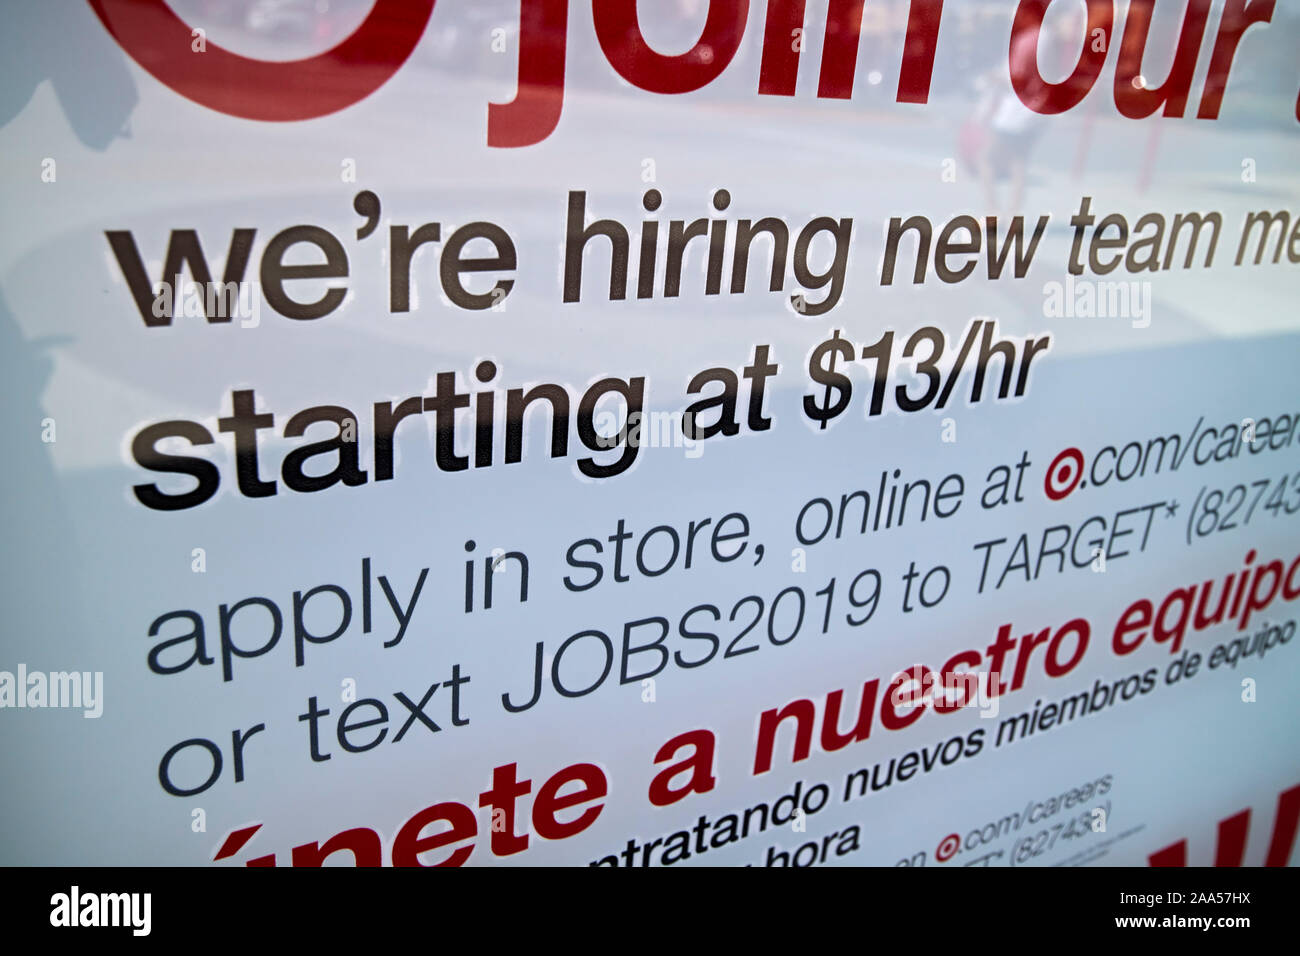 jobs advert advertising 13 dollar per hour jobs at target store florida usa Stock Photo